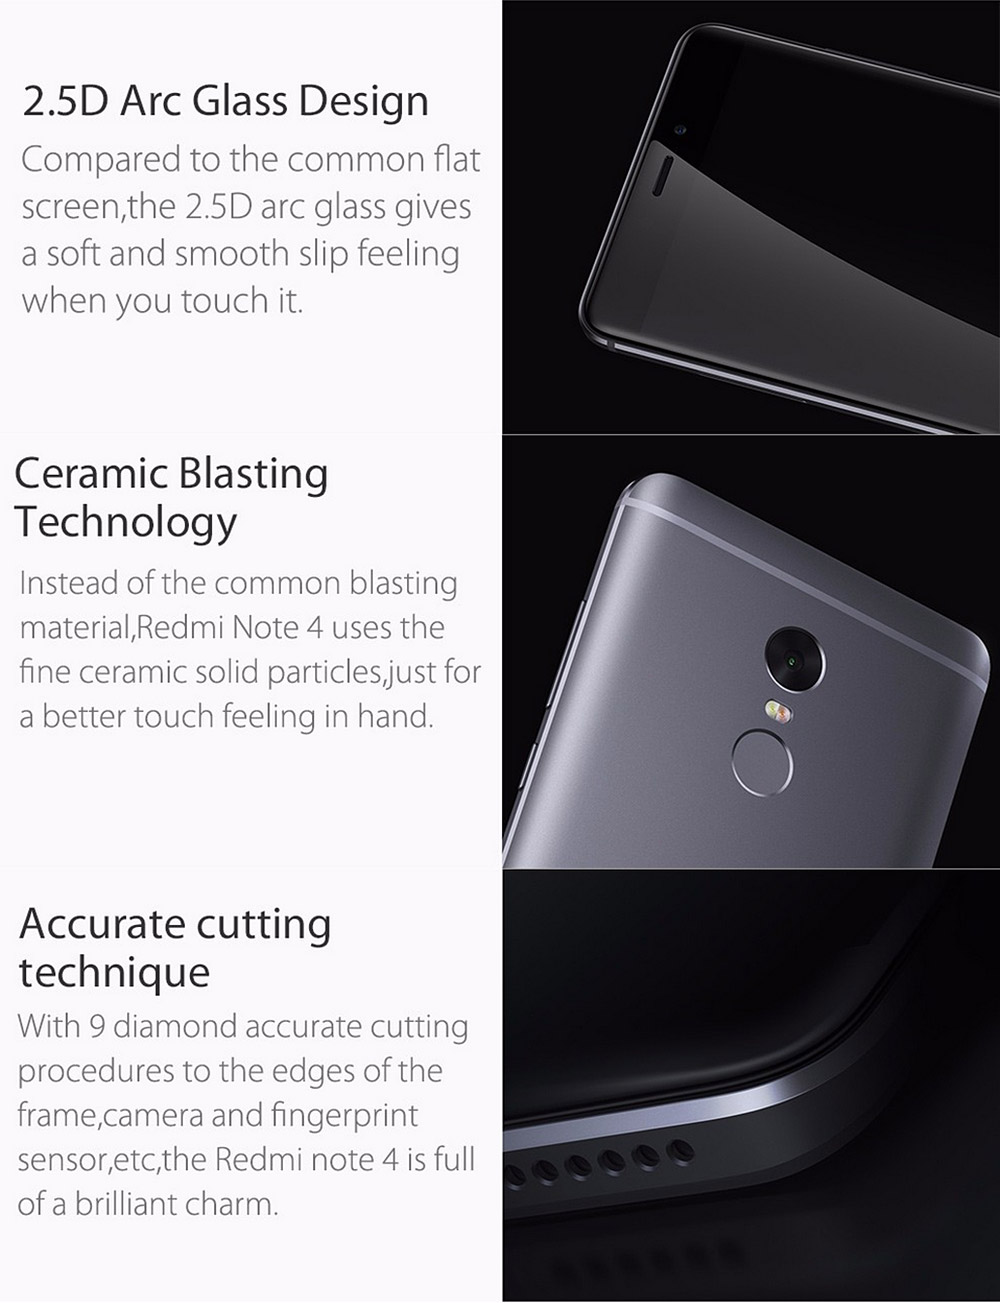 [HK Stock]Xiaomi Redmi Note 4 Pro 5.5inch FHD 2.5D Arc Screen MIUI 8 4G LTE Smartphone Helio X20 MT6797 Deca Core 3GB RAM 64GB ROM 13.0MP Touch ID 4100mAh Metal Body - Silver